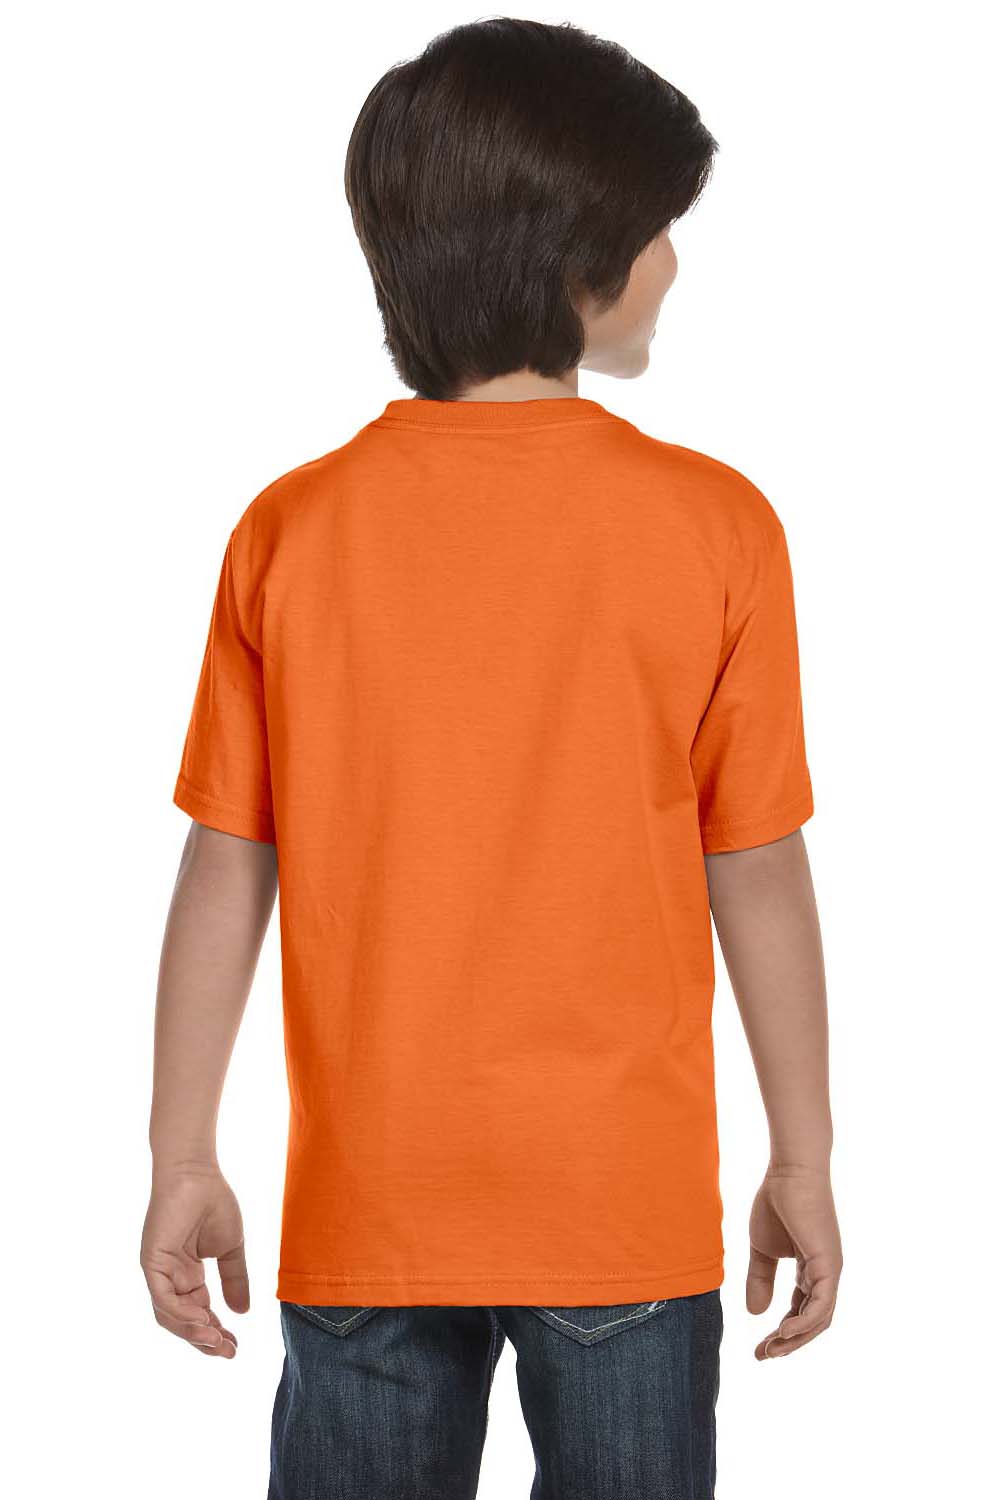 Hanes 5380 Youth Beefy-T Short Sleeve Crewneck T-Shirt Orange Back